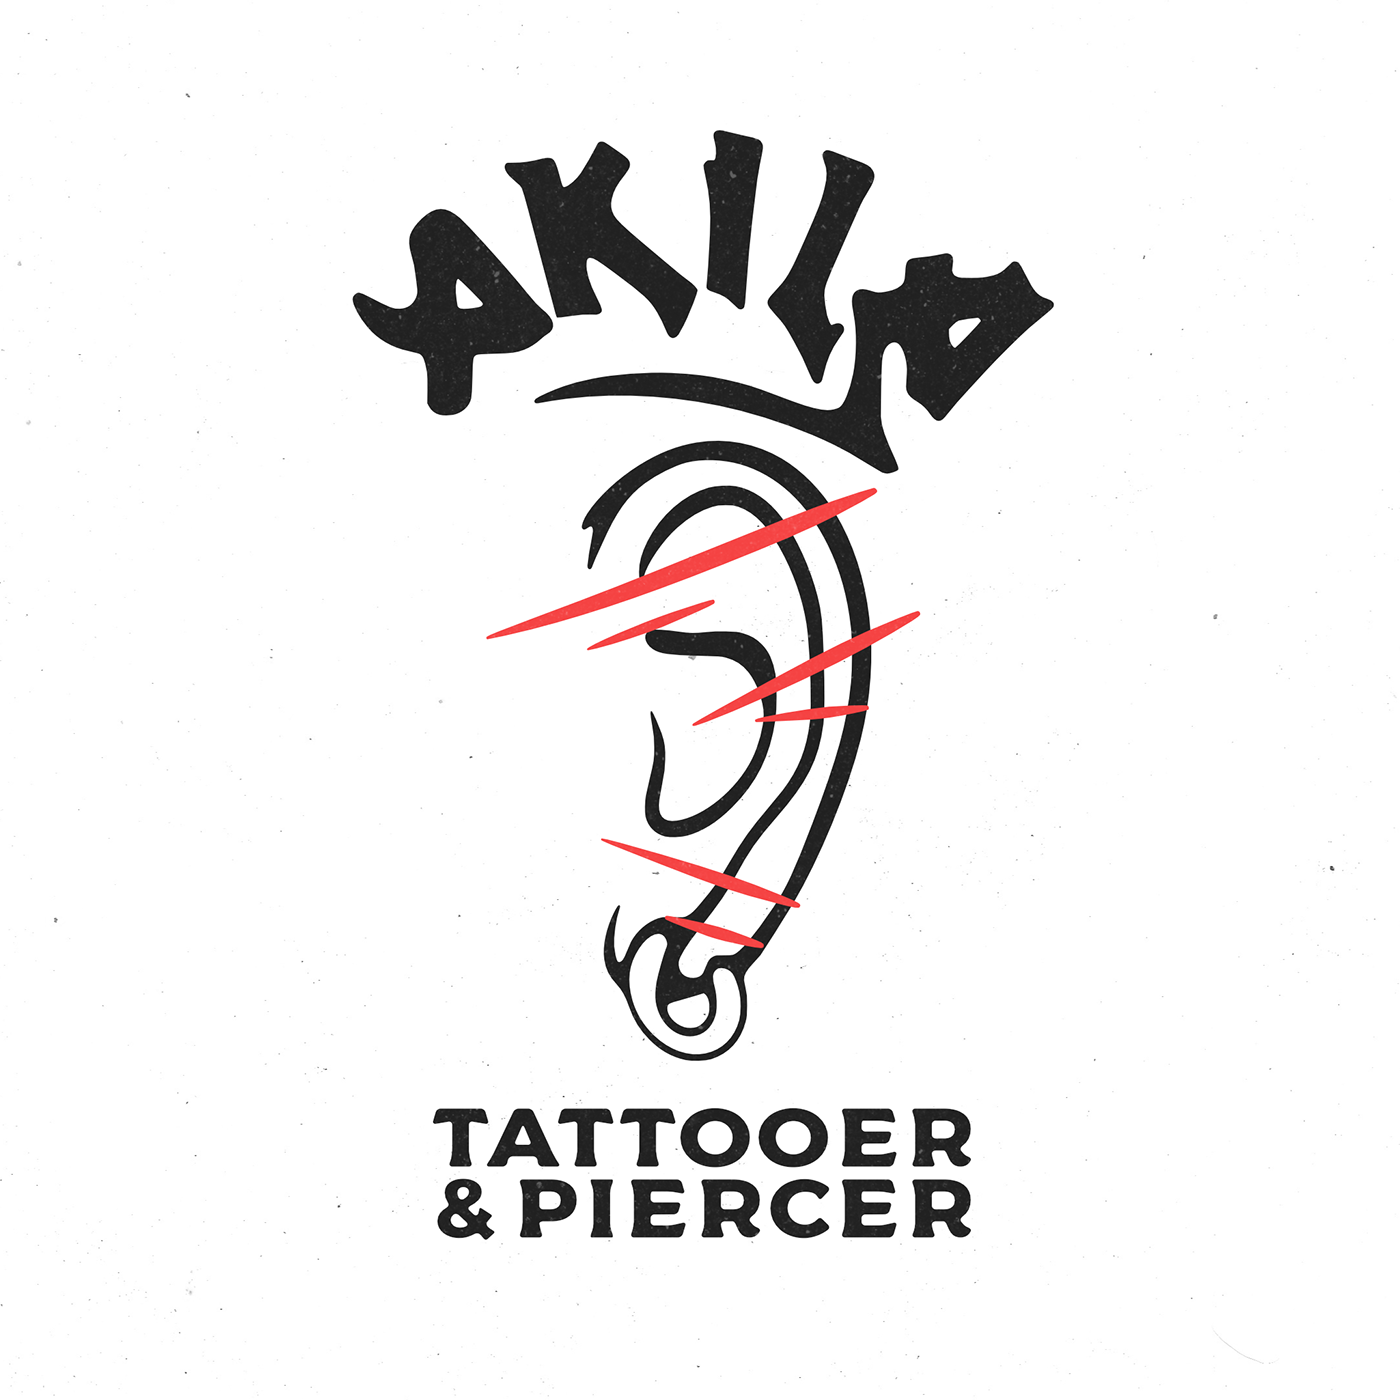 Logotype tattoo artist artwork inked